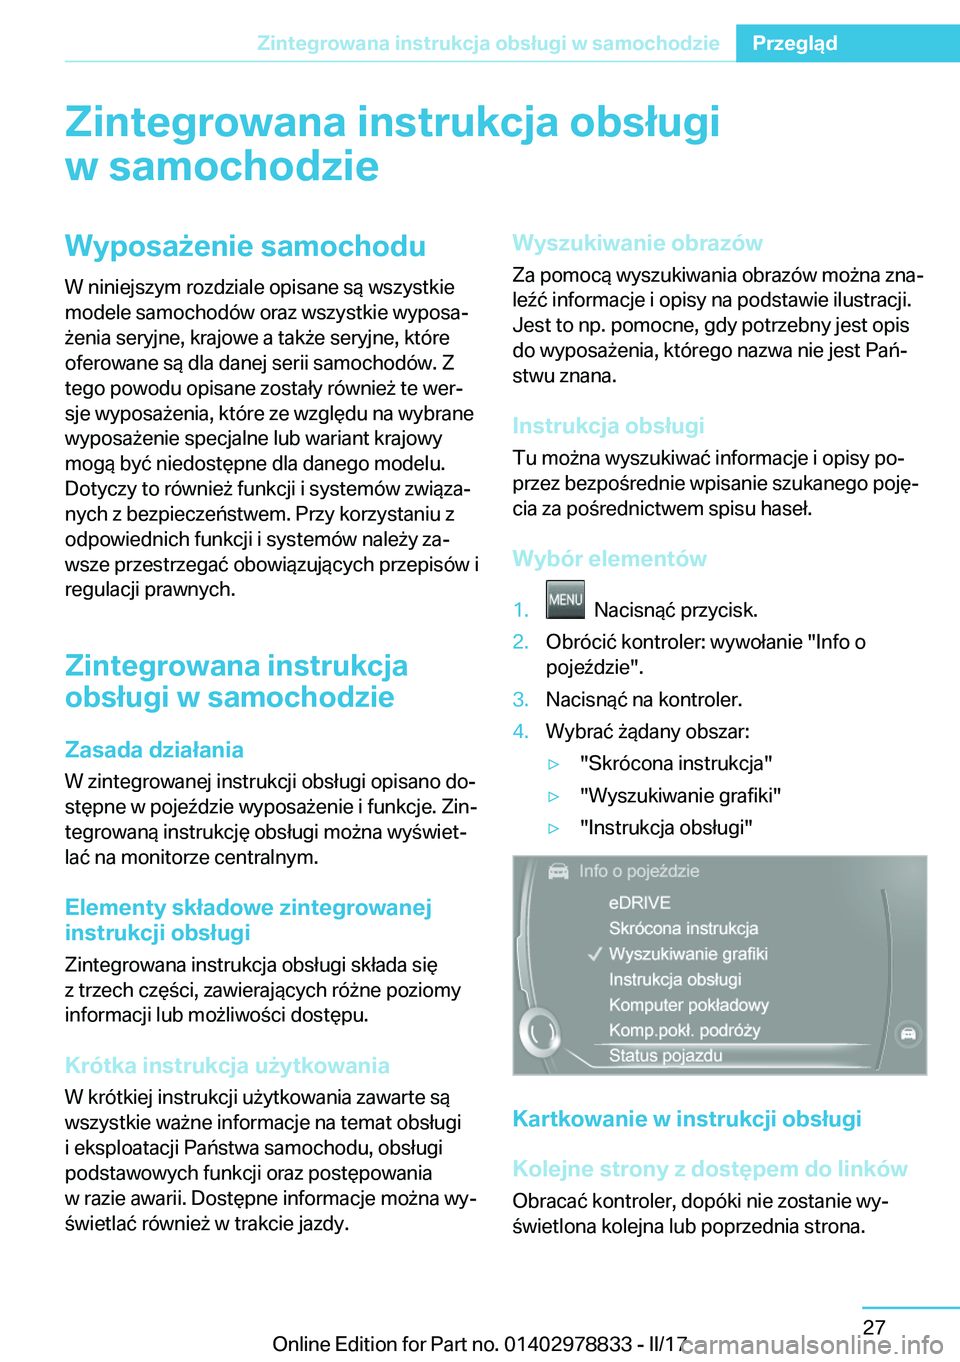 BMW I3 2017  Instrukcja obsługi (in Polish) �Z�i�n�t�e�g�r�o�w�a�n�a��i�n�s�t�r�u�k�c�j�a��o�b�s�ł�u�g�i�w��s�a�m�o�c�h�o�d�z�i�e�W�y�p�o�s�a9�e�n�i�e��s�a�m�o�c�h�o�d�u
�W� �n�i�n�i�e�j�s�z�y�m� �r�o�z�d�z�i�a�l�e� �o�p�i�s�a�n�e� �s�